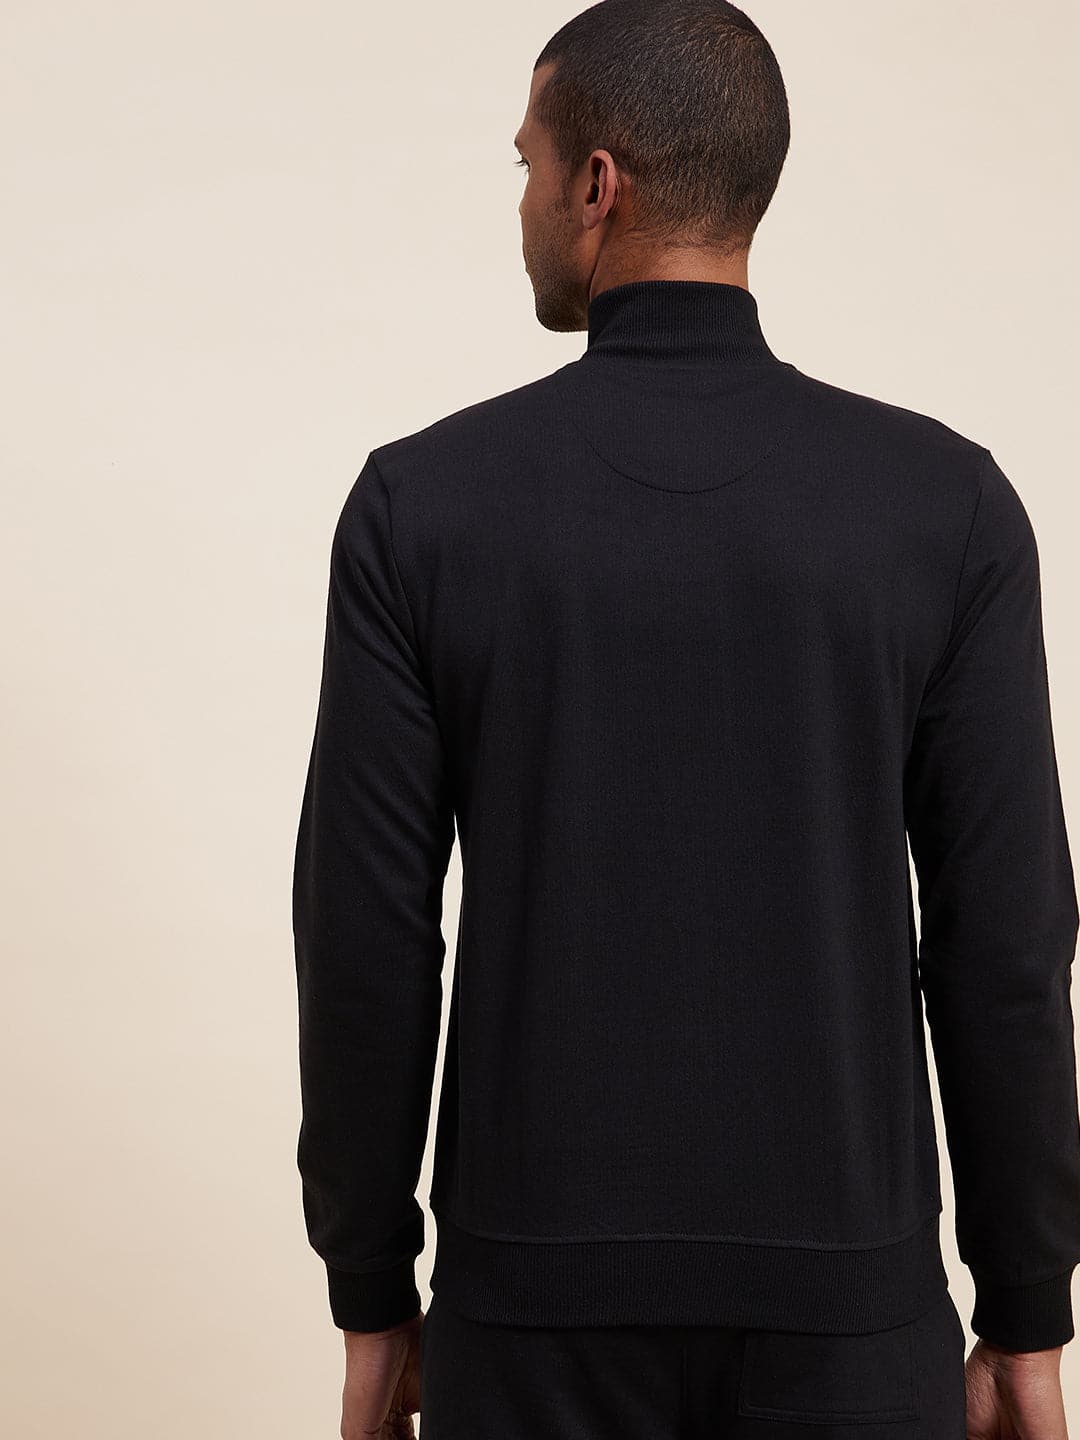 Men's Black High Neck Half Zipper MASCLN Sweatshirt - LYUSH-MASCLN